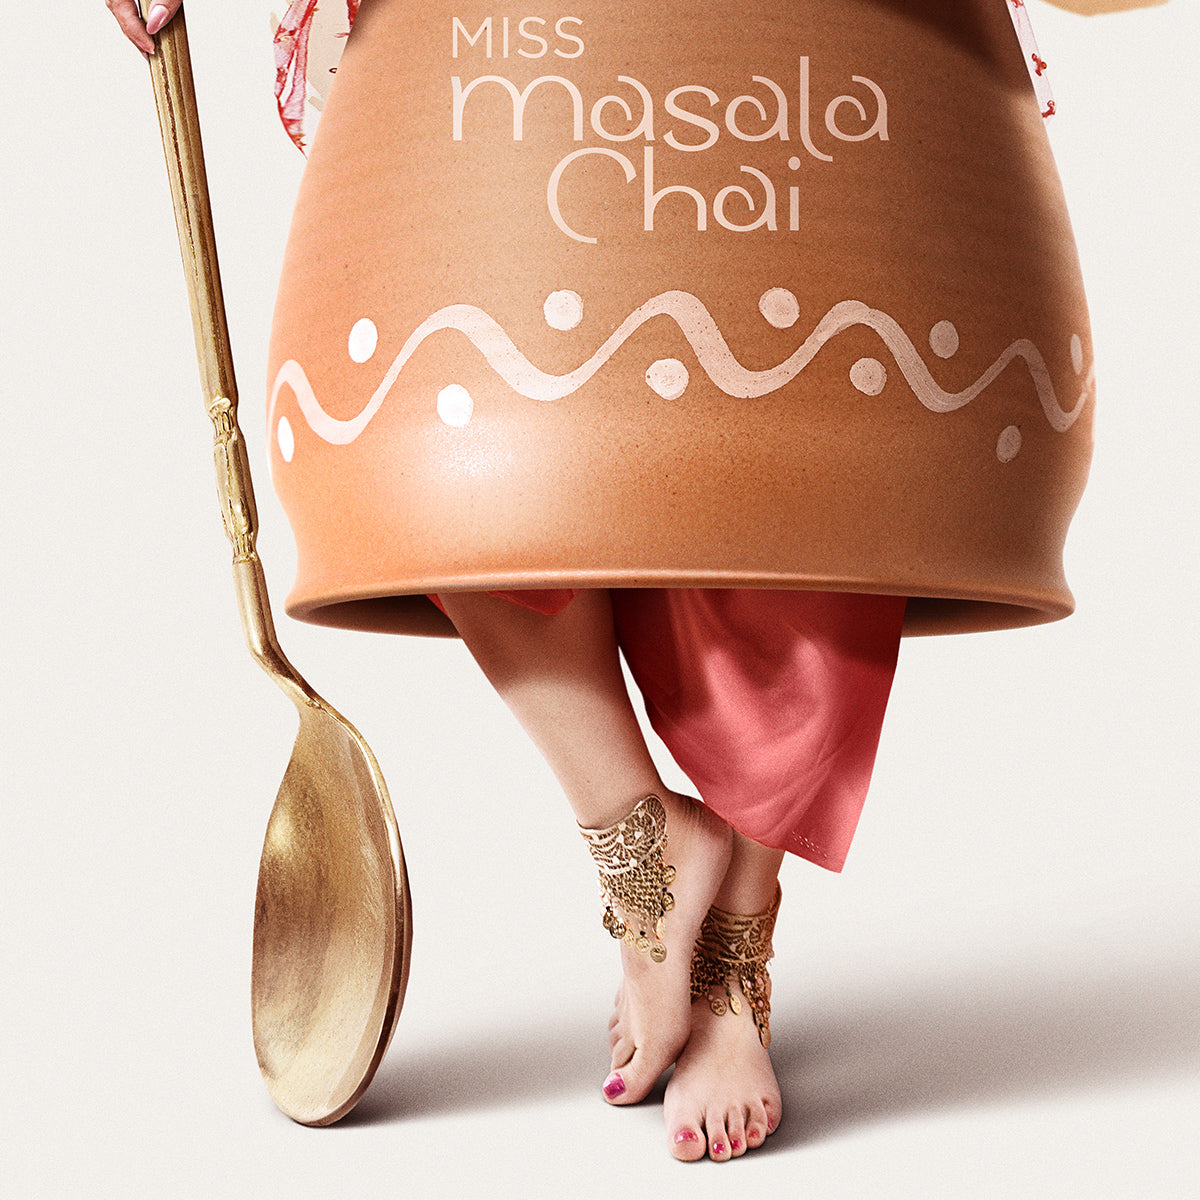 Miss Masala Chai